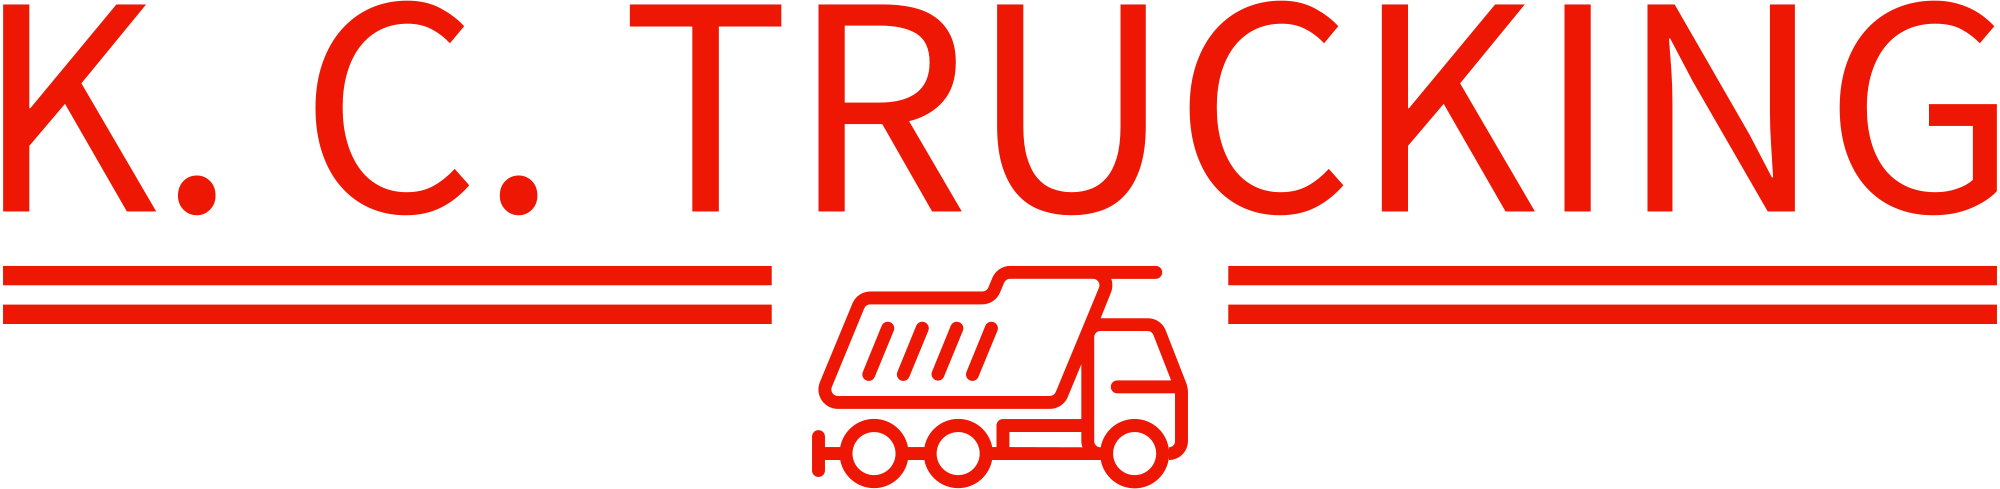 K. C. Trucking